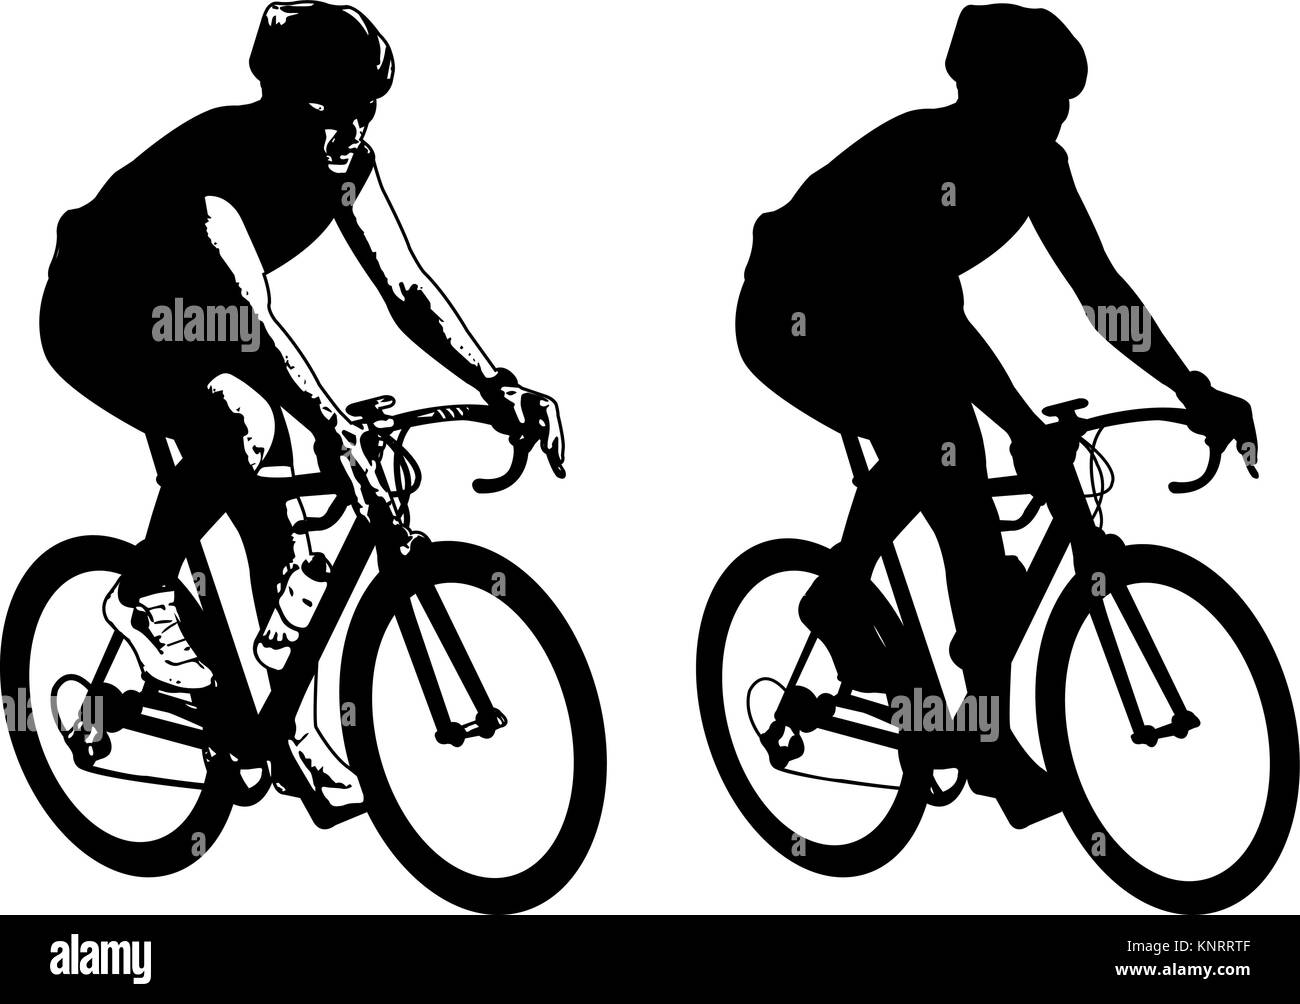 Radfahrer Skizze Abbildung und Silhouette-Vektor Stock Vektor